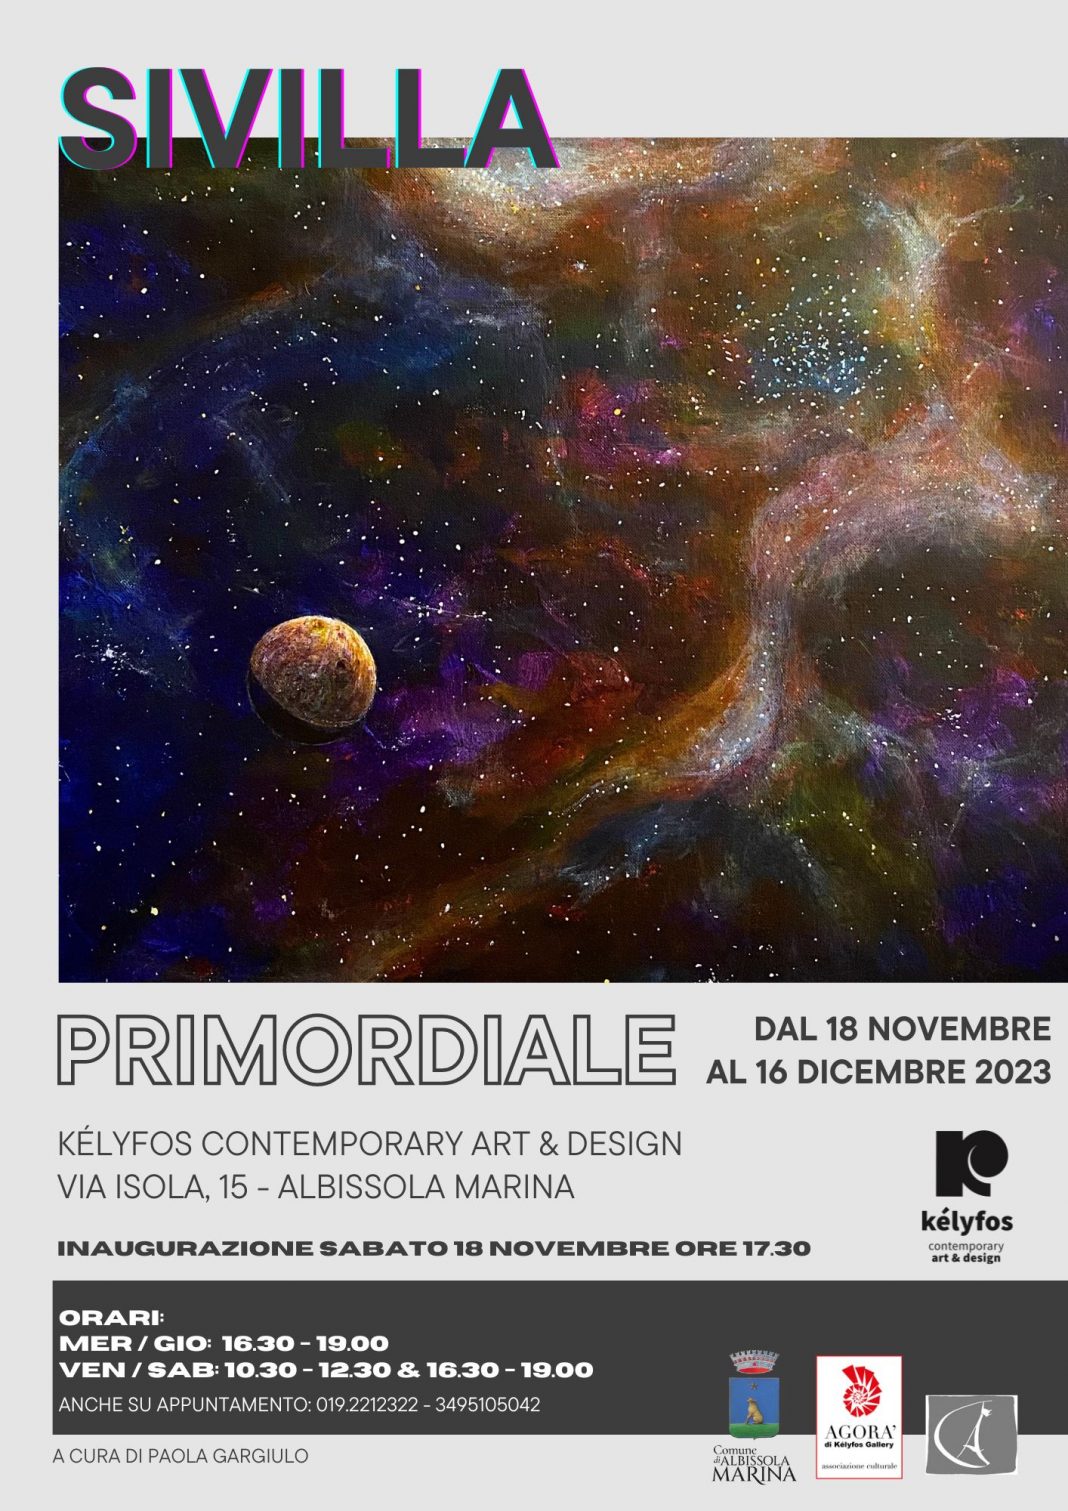 Paolo Sivilla – Primordialehttps://www.exibart.com/repository/media/formidable/11/img/75c/Locandina-Primordiale-1068x1511.jpg